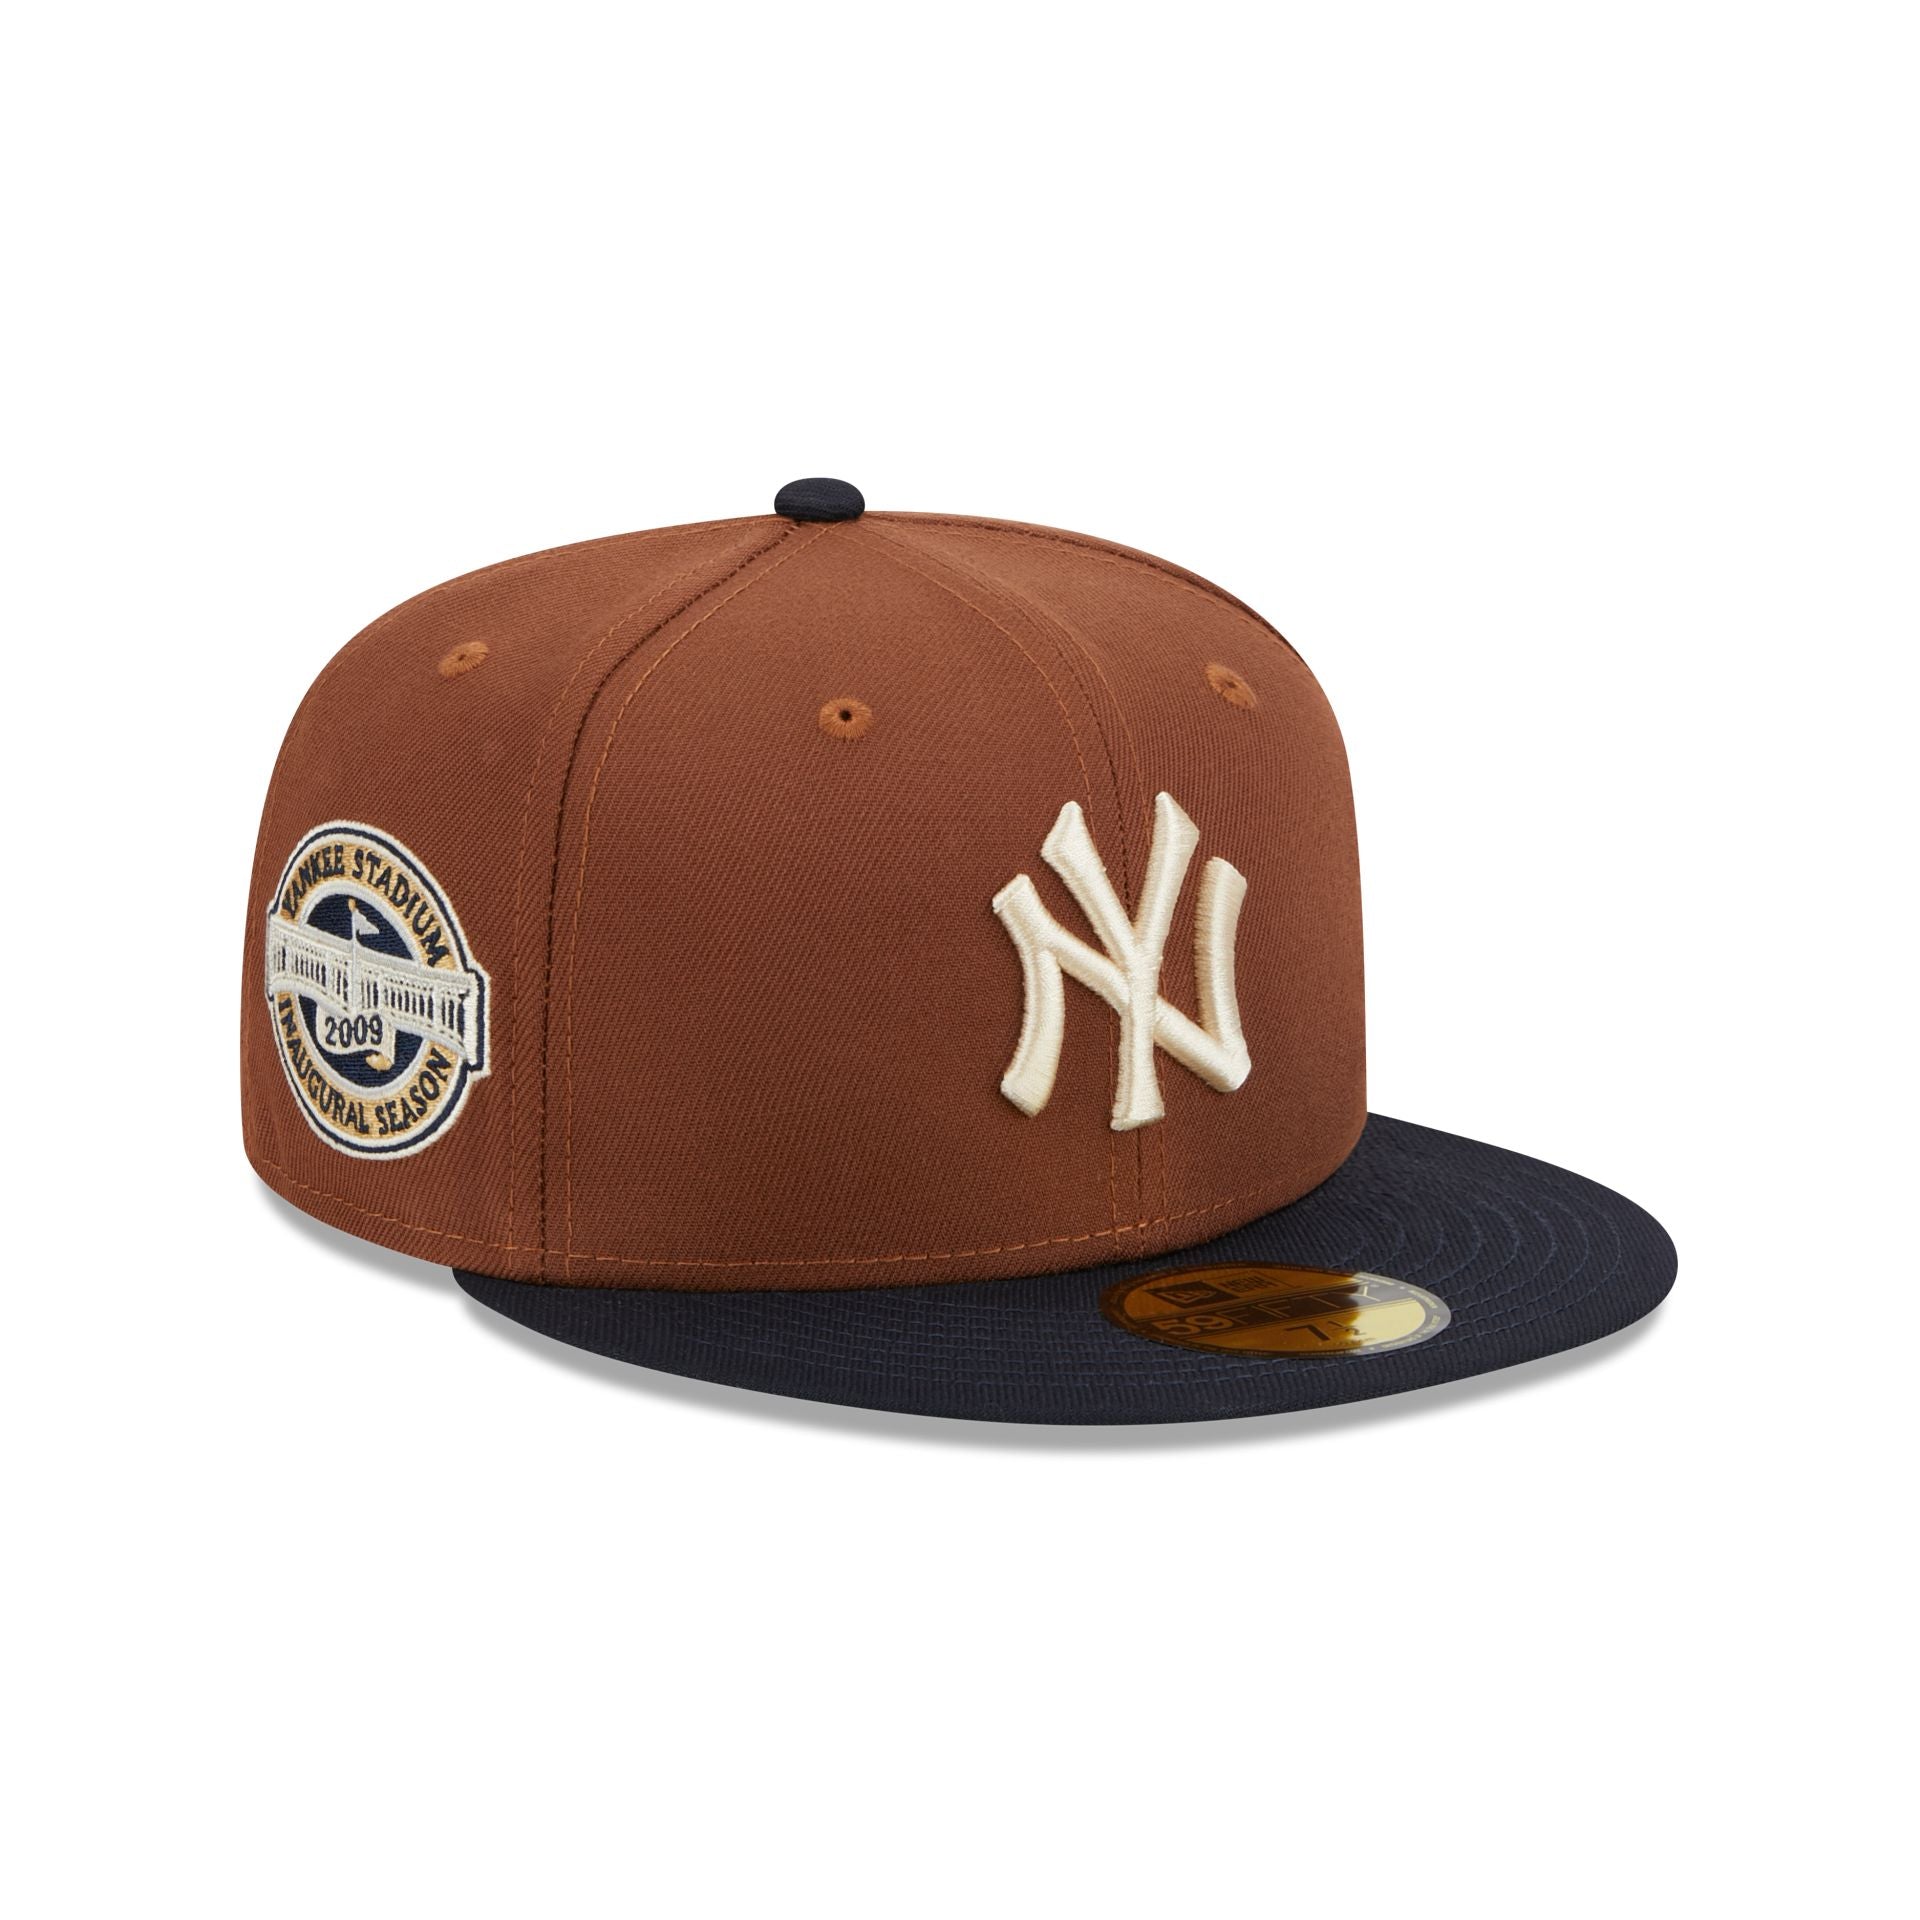 Gorra New Era New York Yankees 9FIFTY Color Pack New Era